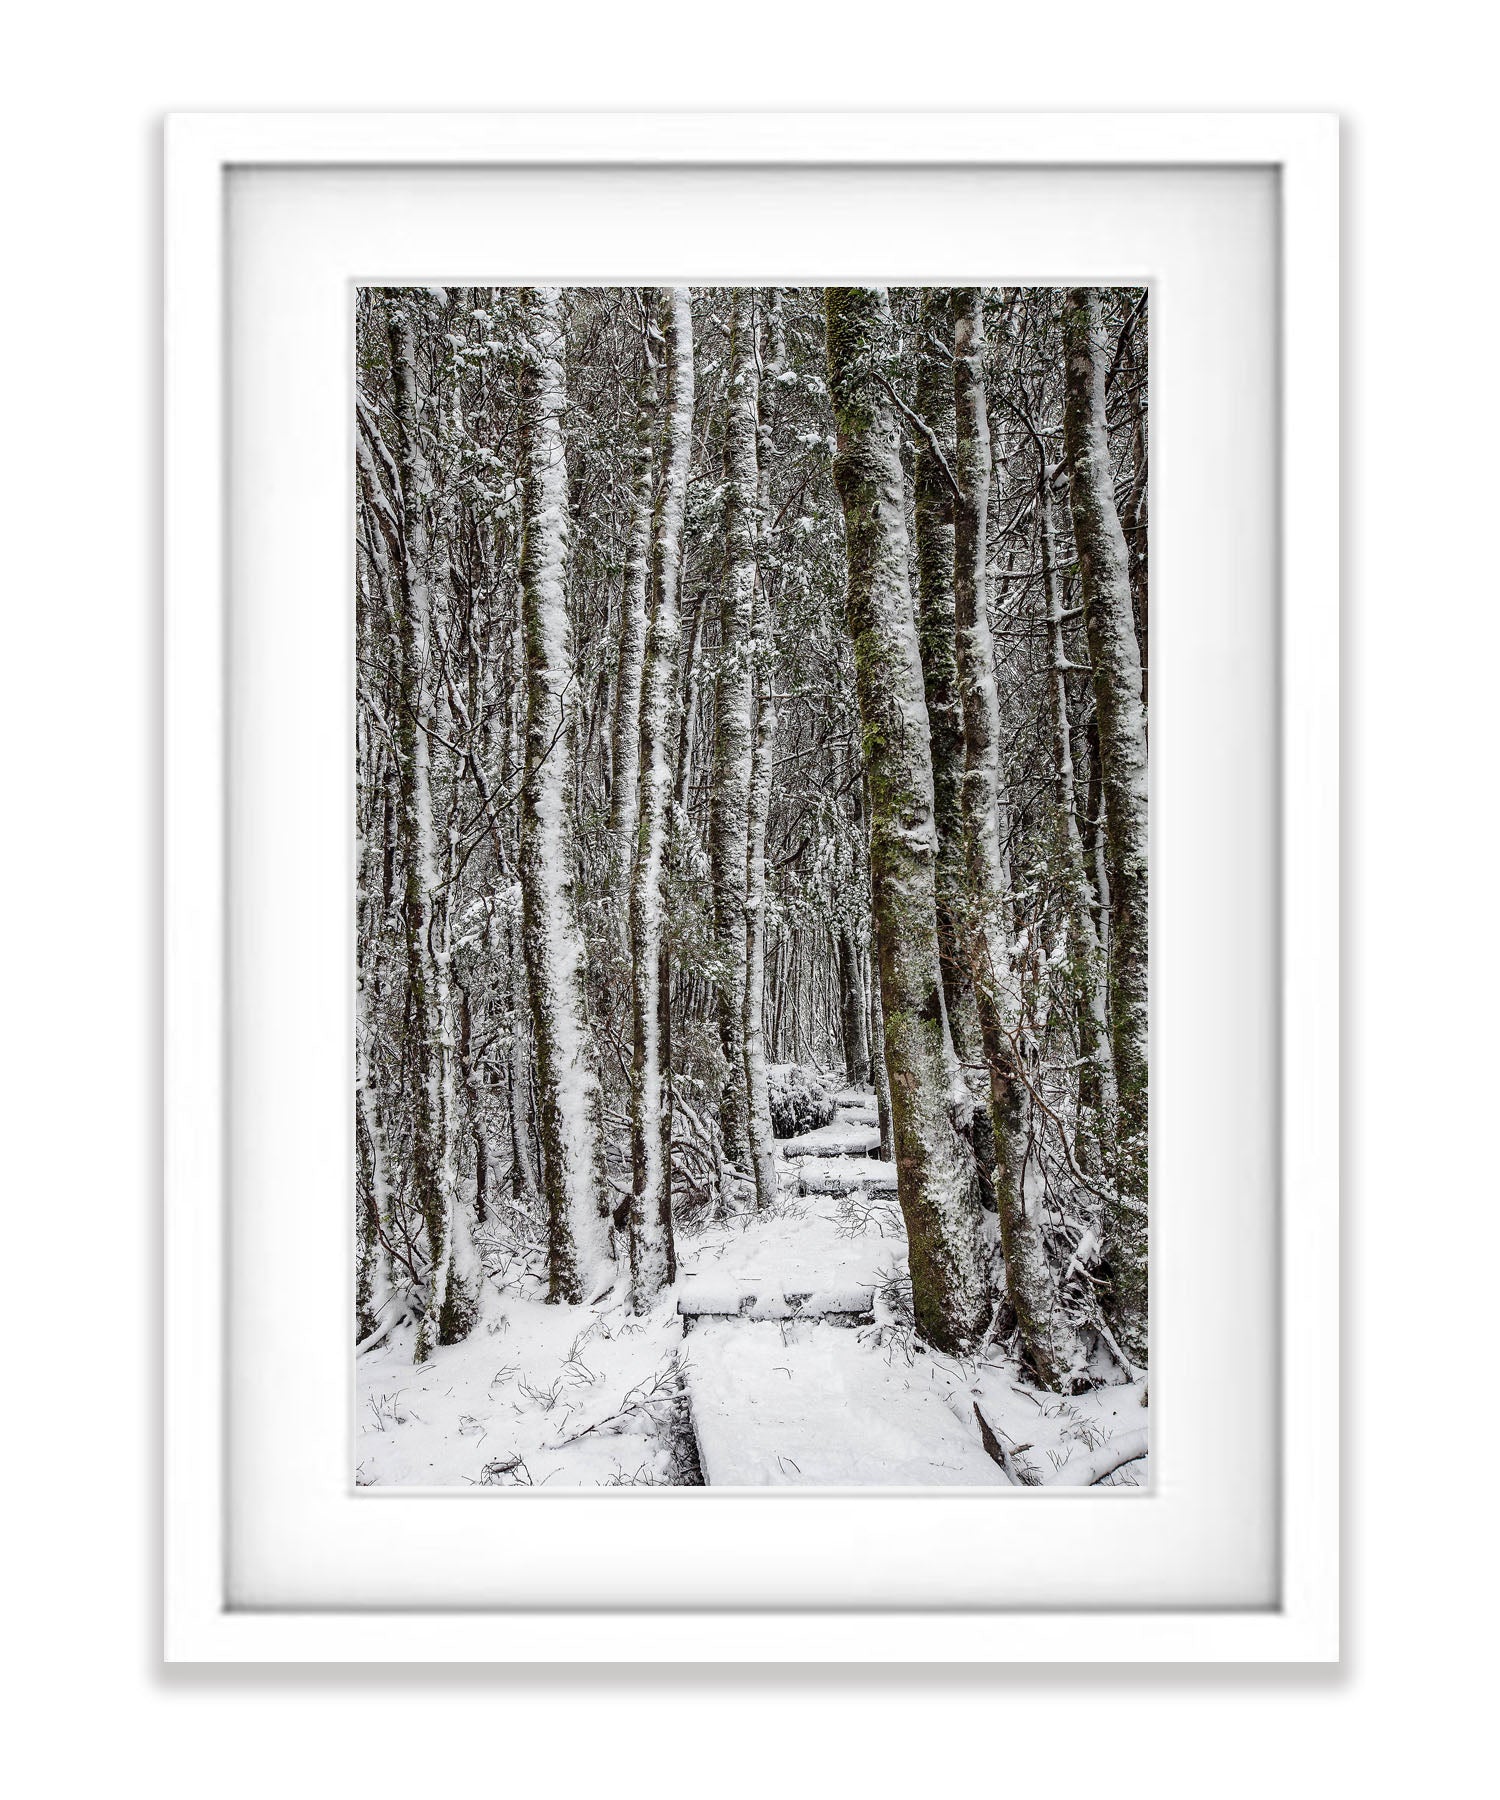 Walkway through the Snow-Covered Forest, Cradle Mountain, Tasmania